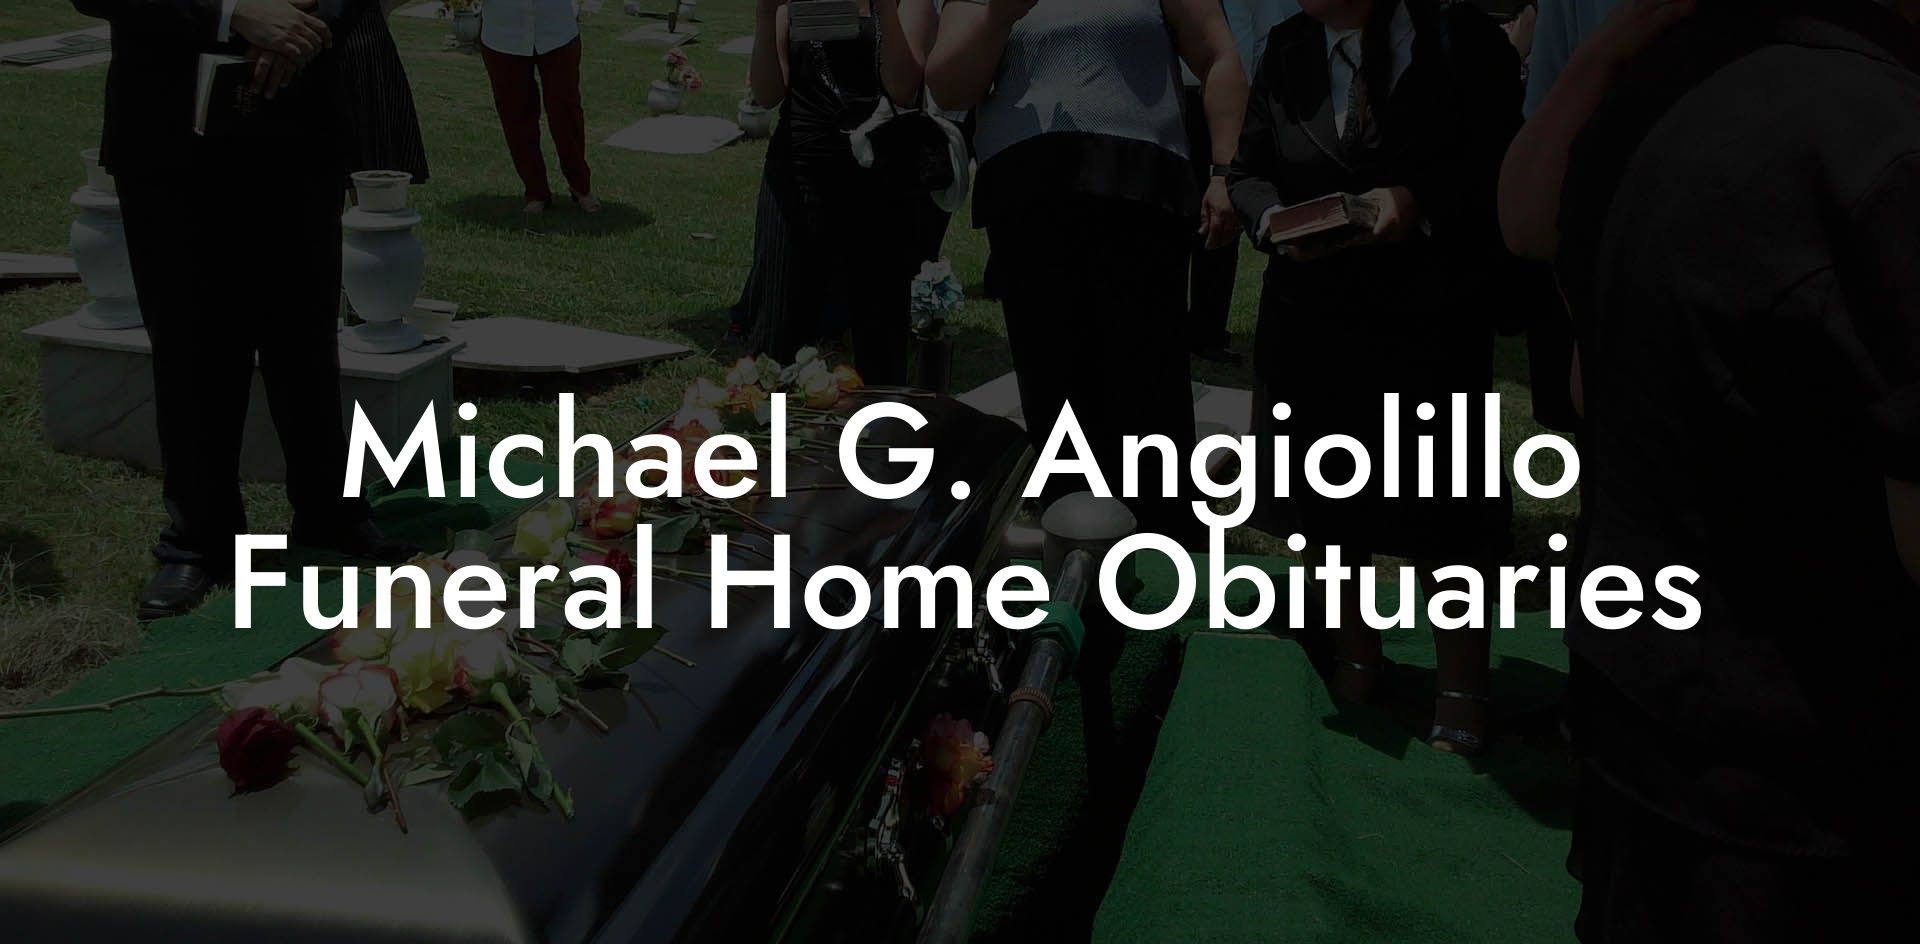 Michael G. Angiolillo Funeral Home Obituaries